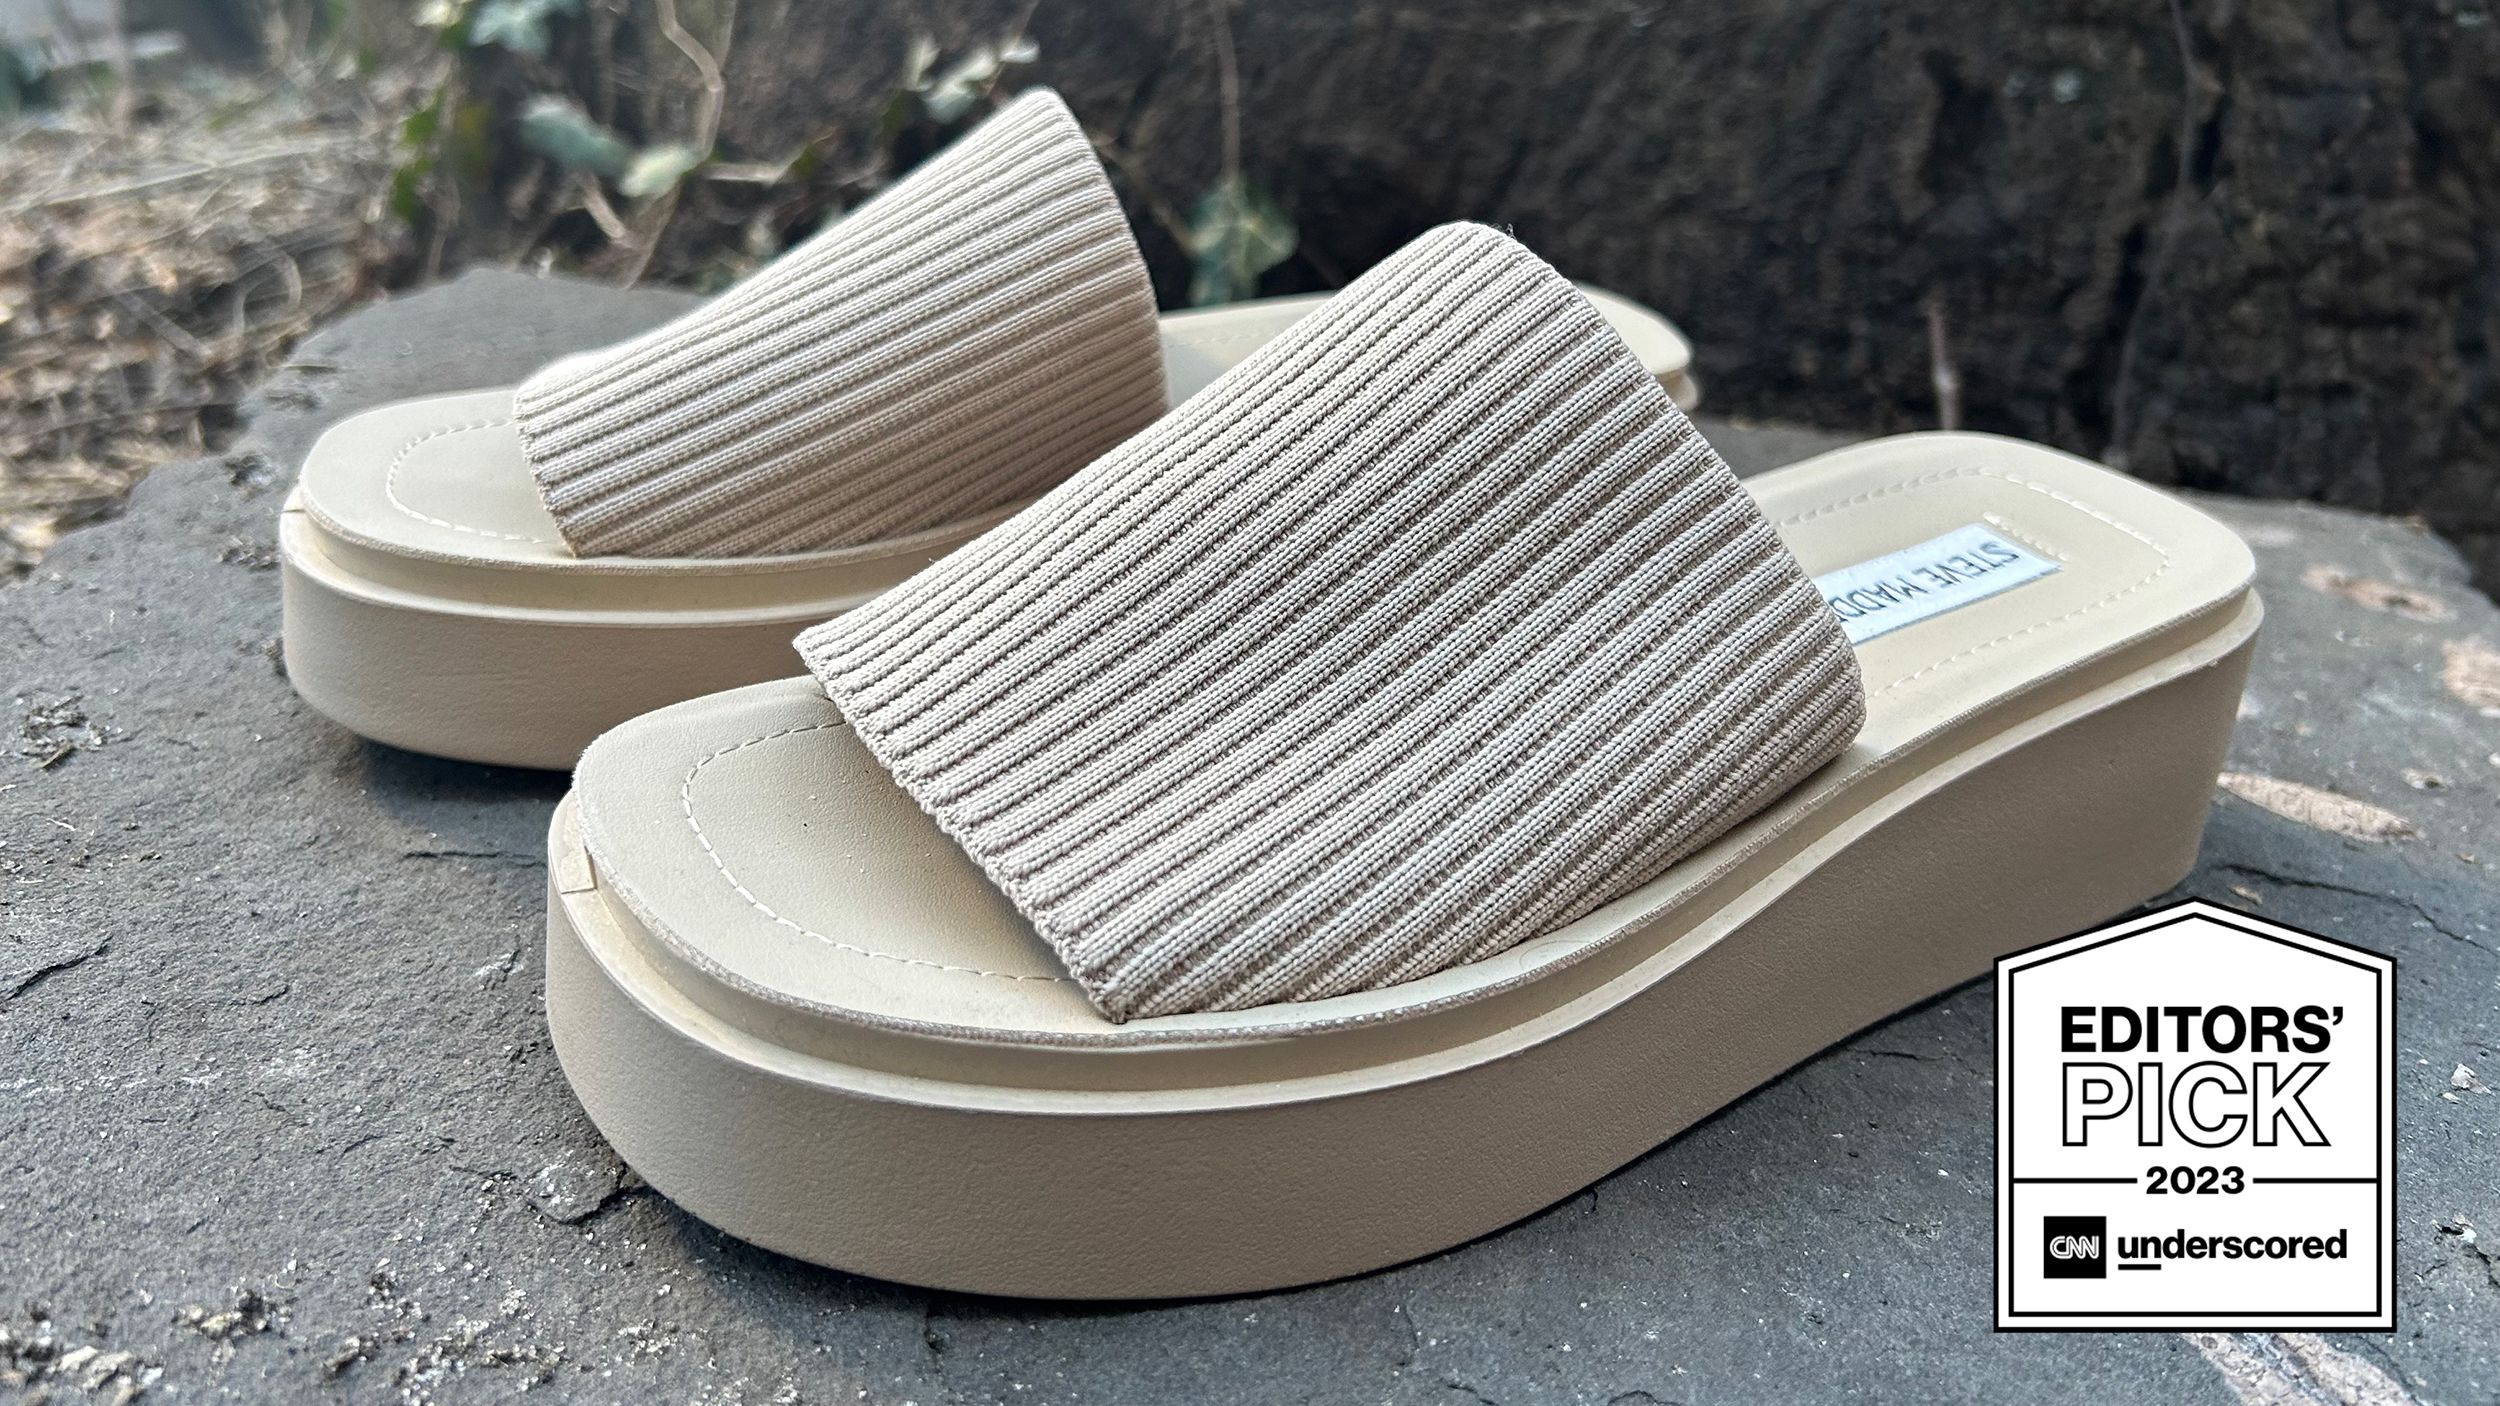 Sanuk, Shoes, New Wo Box Womens Sanuk Yoga Mat Sandals Summer Outdoor Flip  Flop Size 1